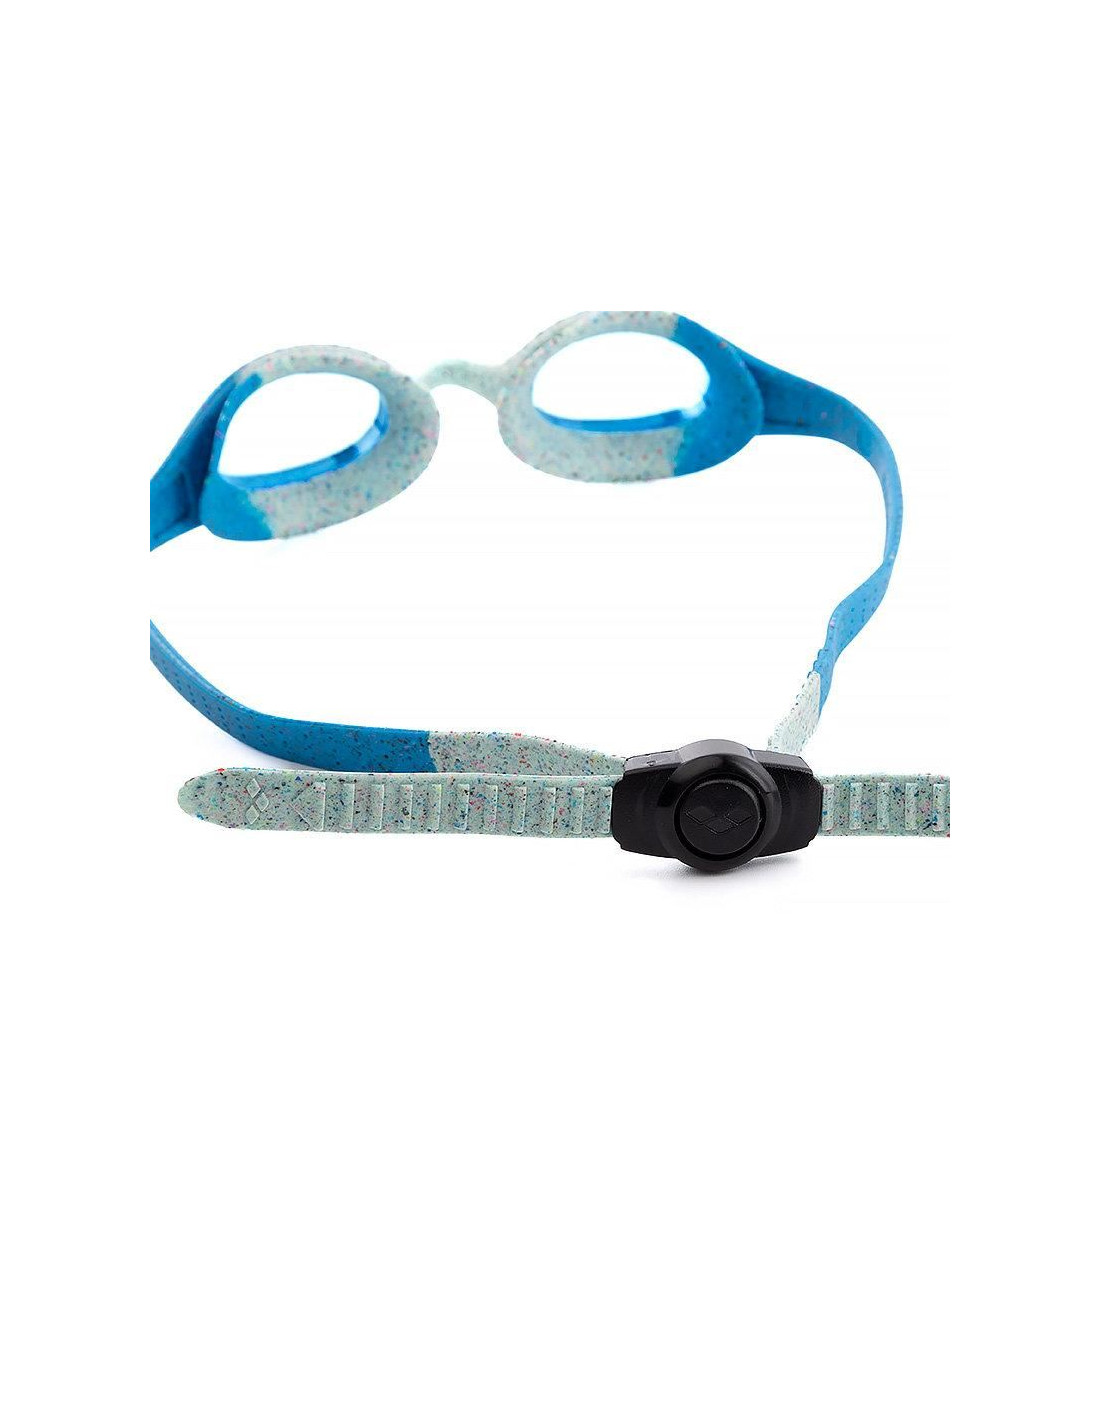 Gafas de natación Arena Spider con lentes trasparentes